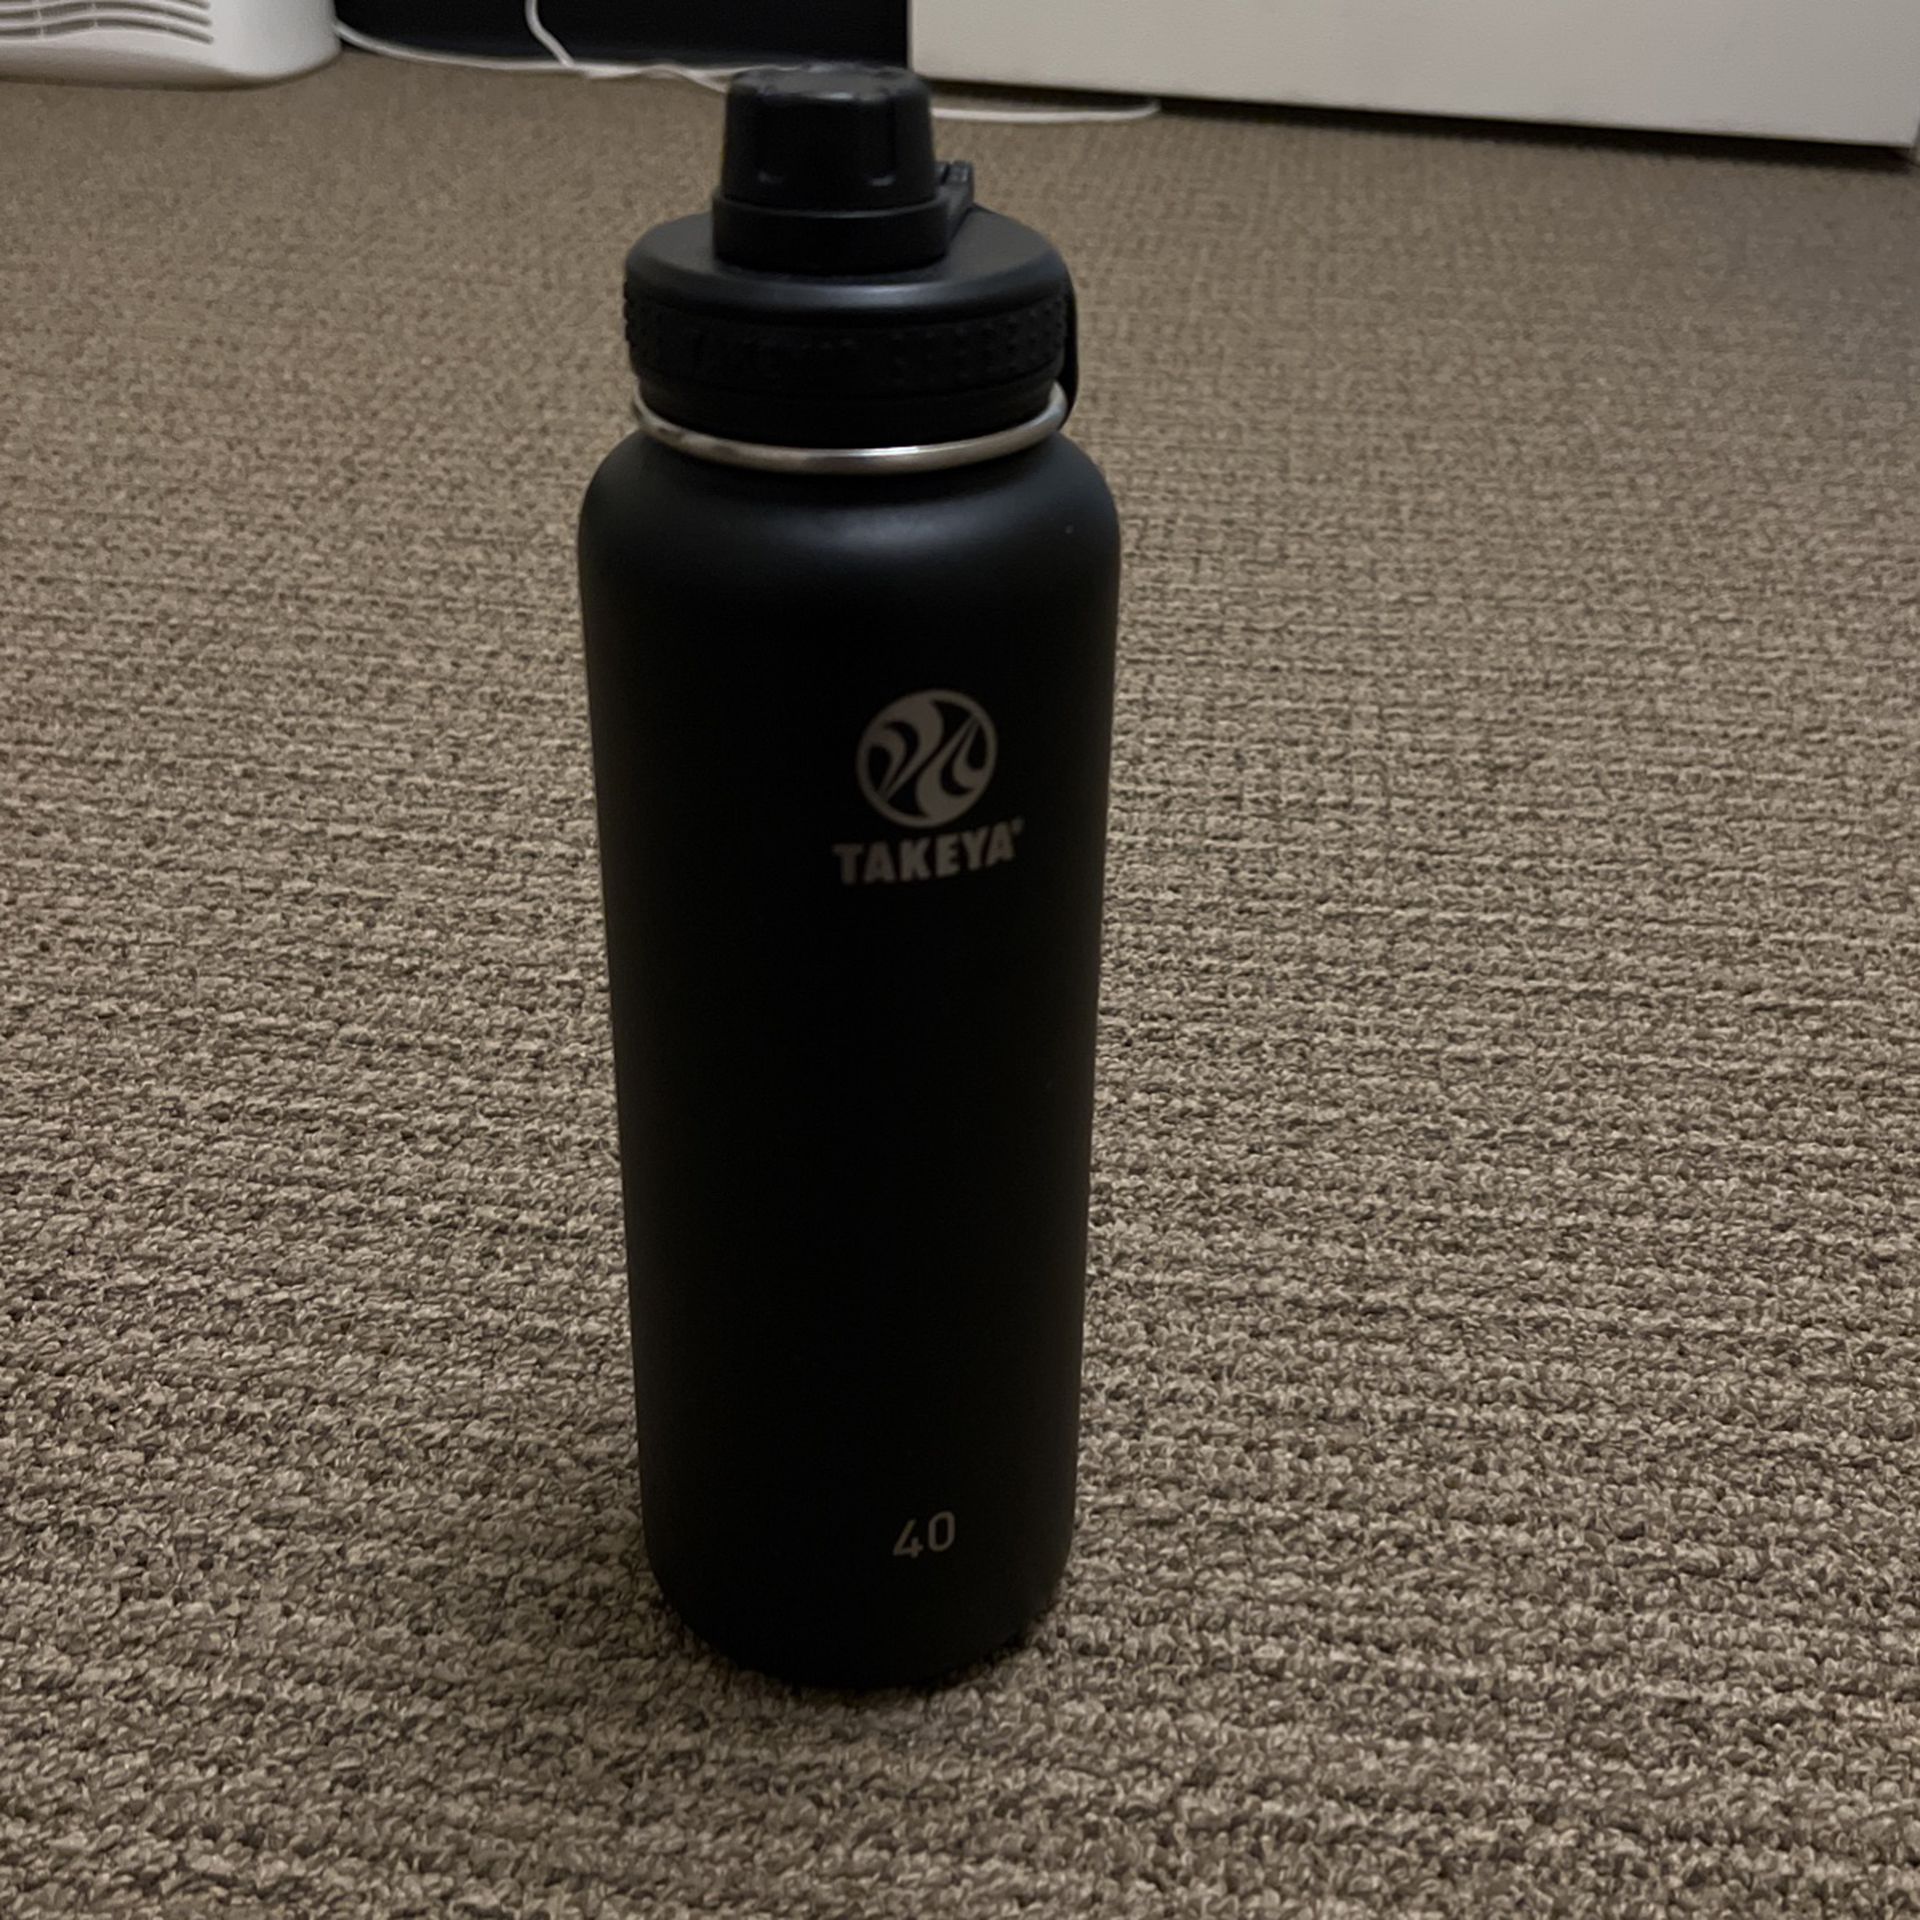 Takeya Hydro Flask (40)